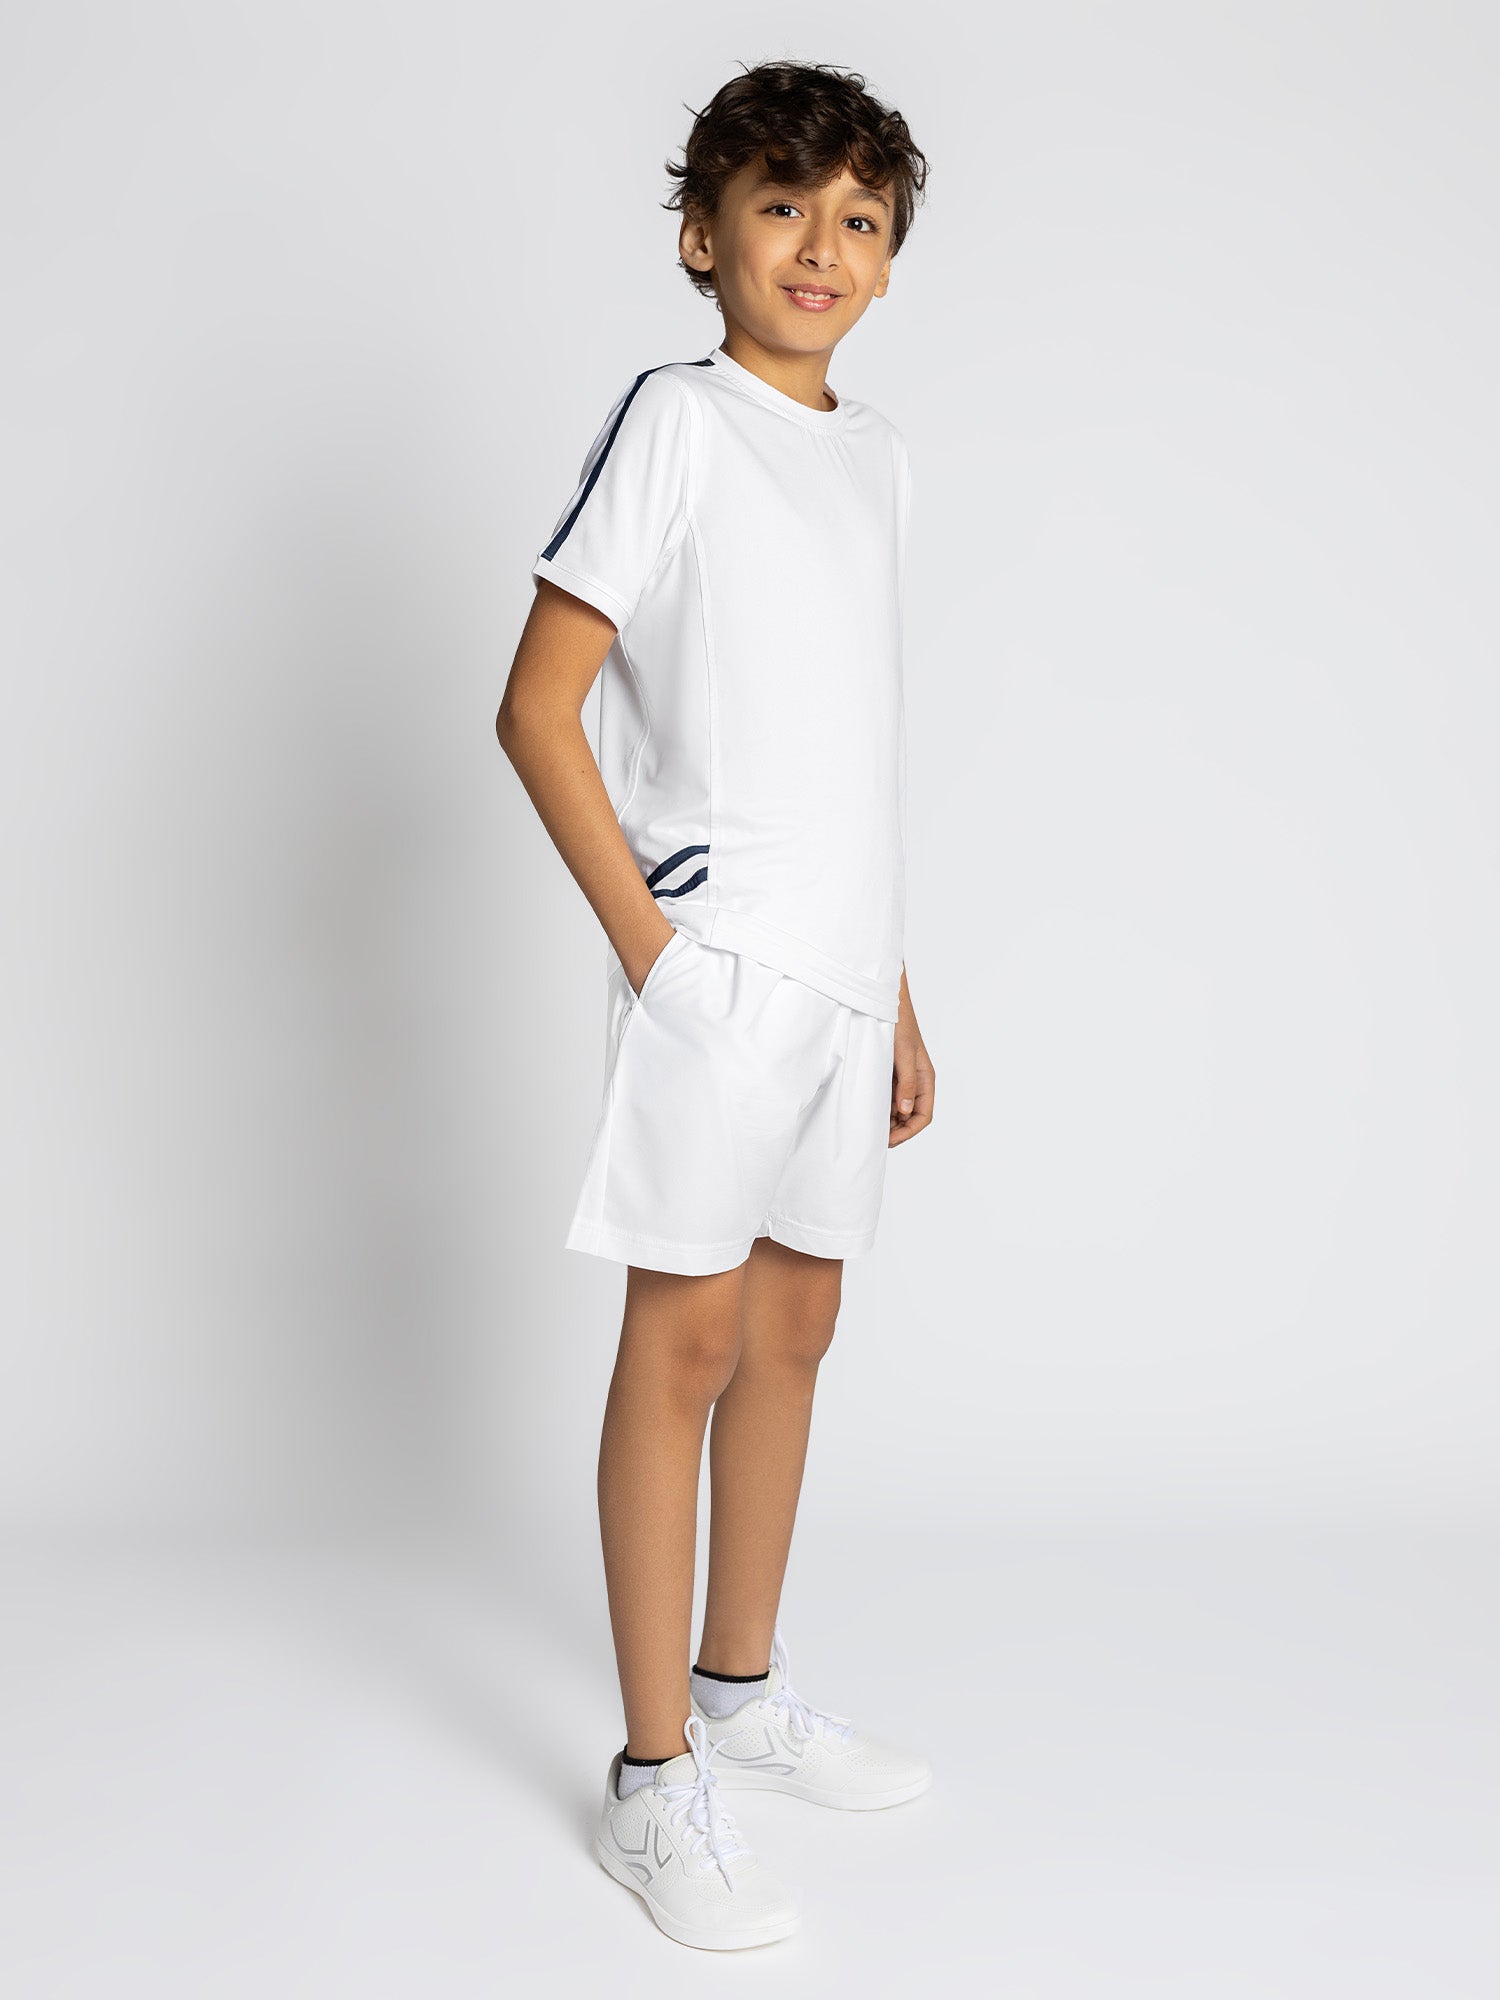 Boys Classic Tennis Short	- White